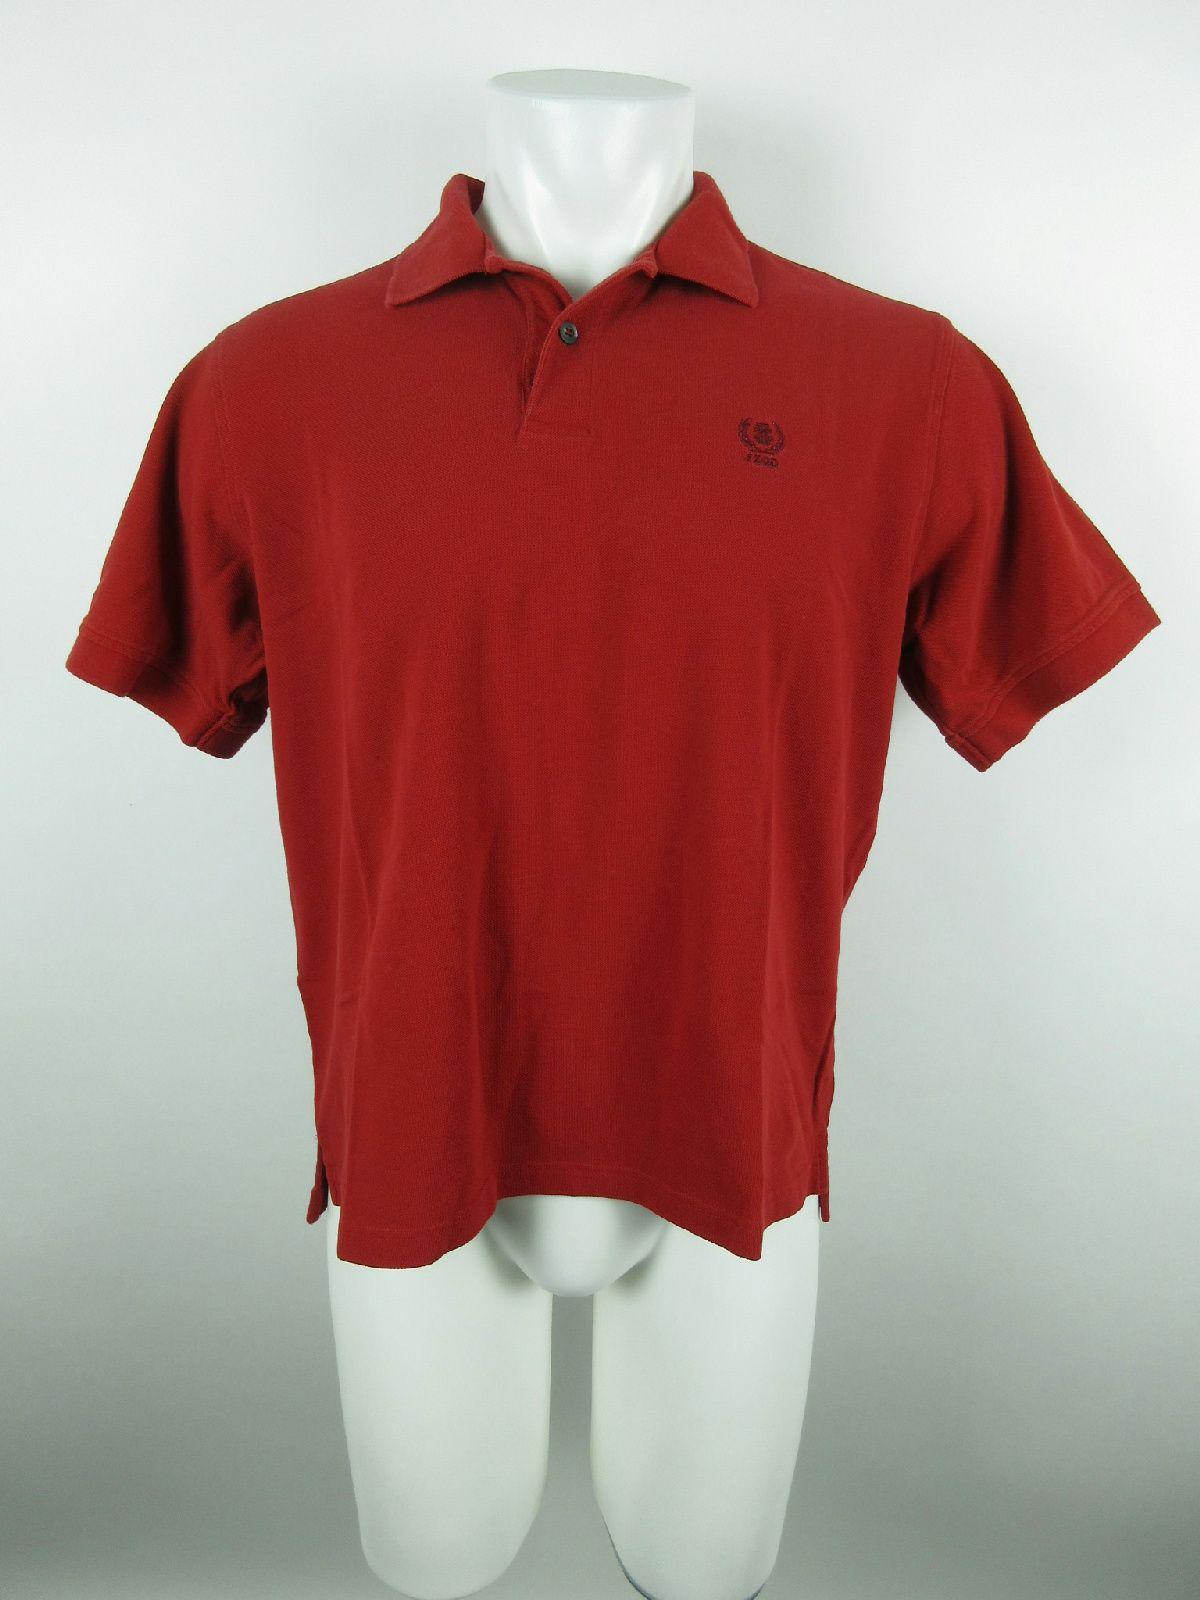 Izod Shirt Logo - Izod Men's sz L Cotton Short Sleeve Logo Embroidered Red Polo Casual